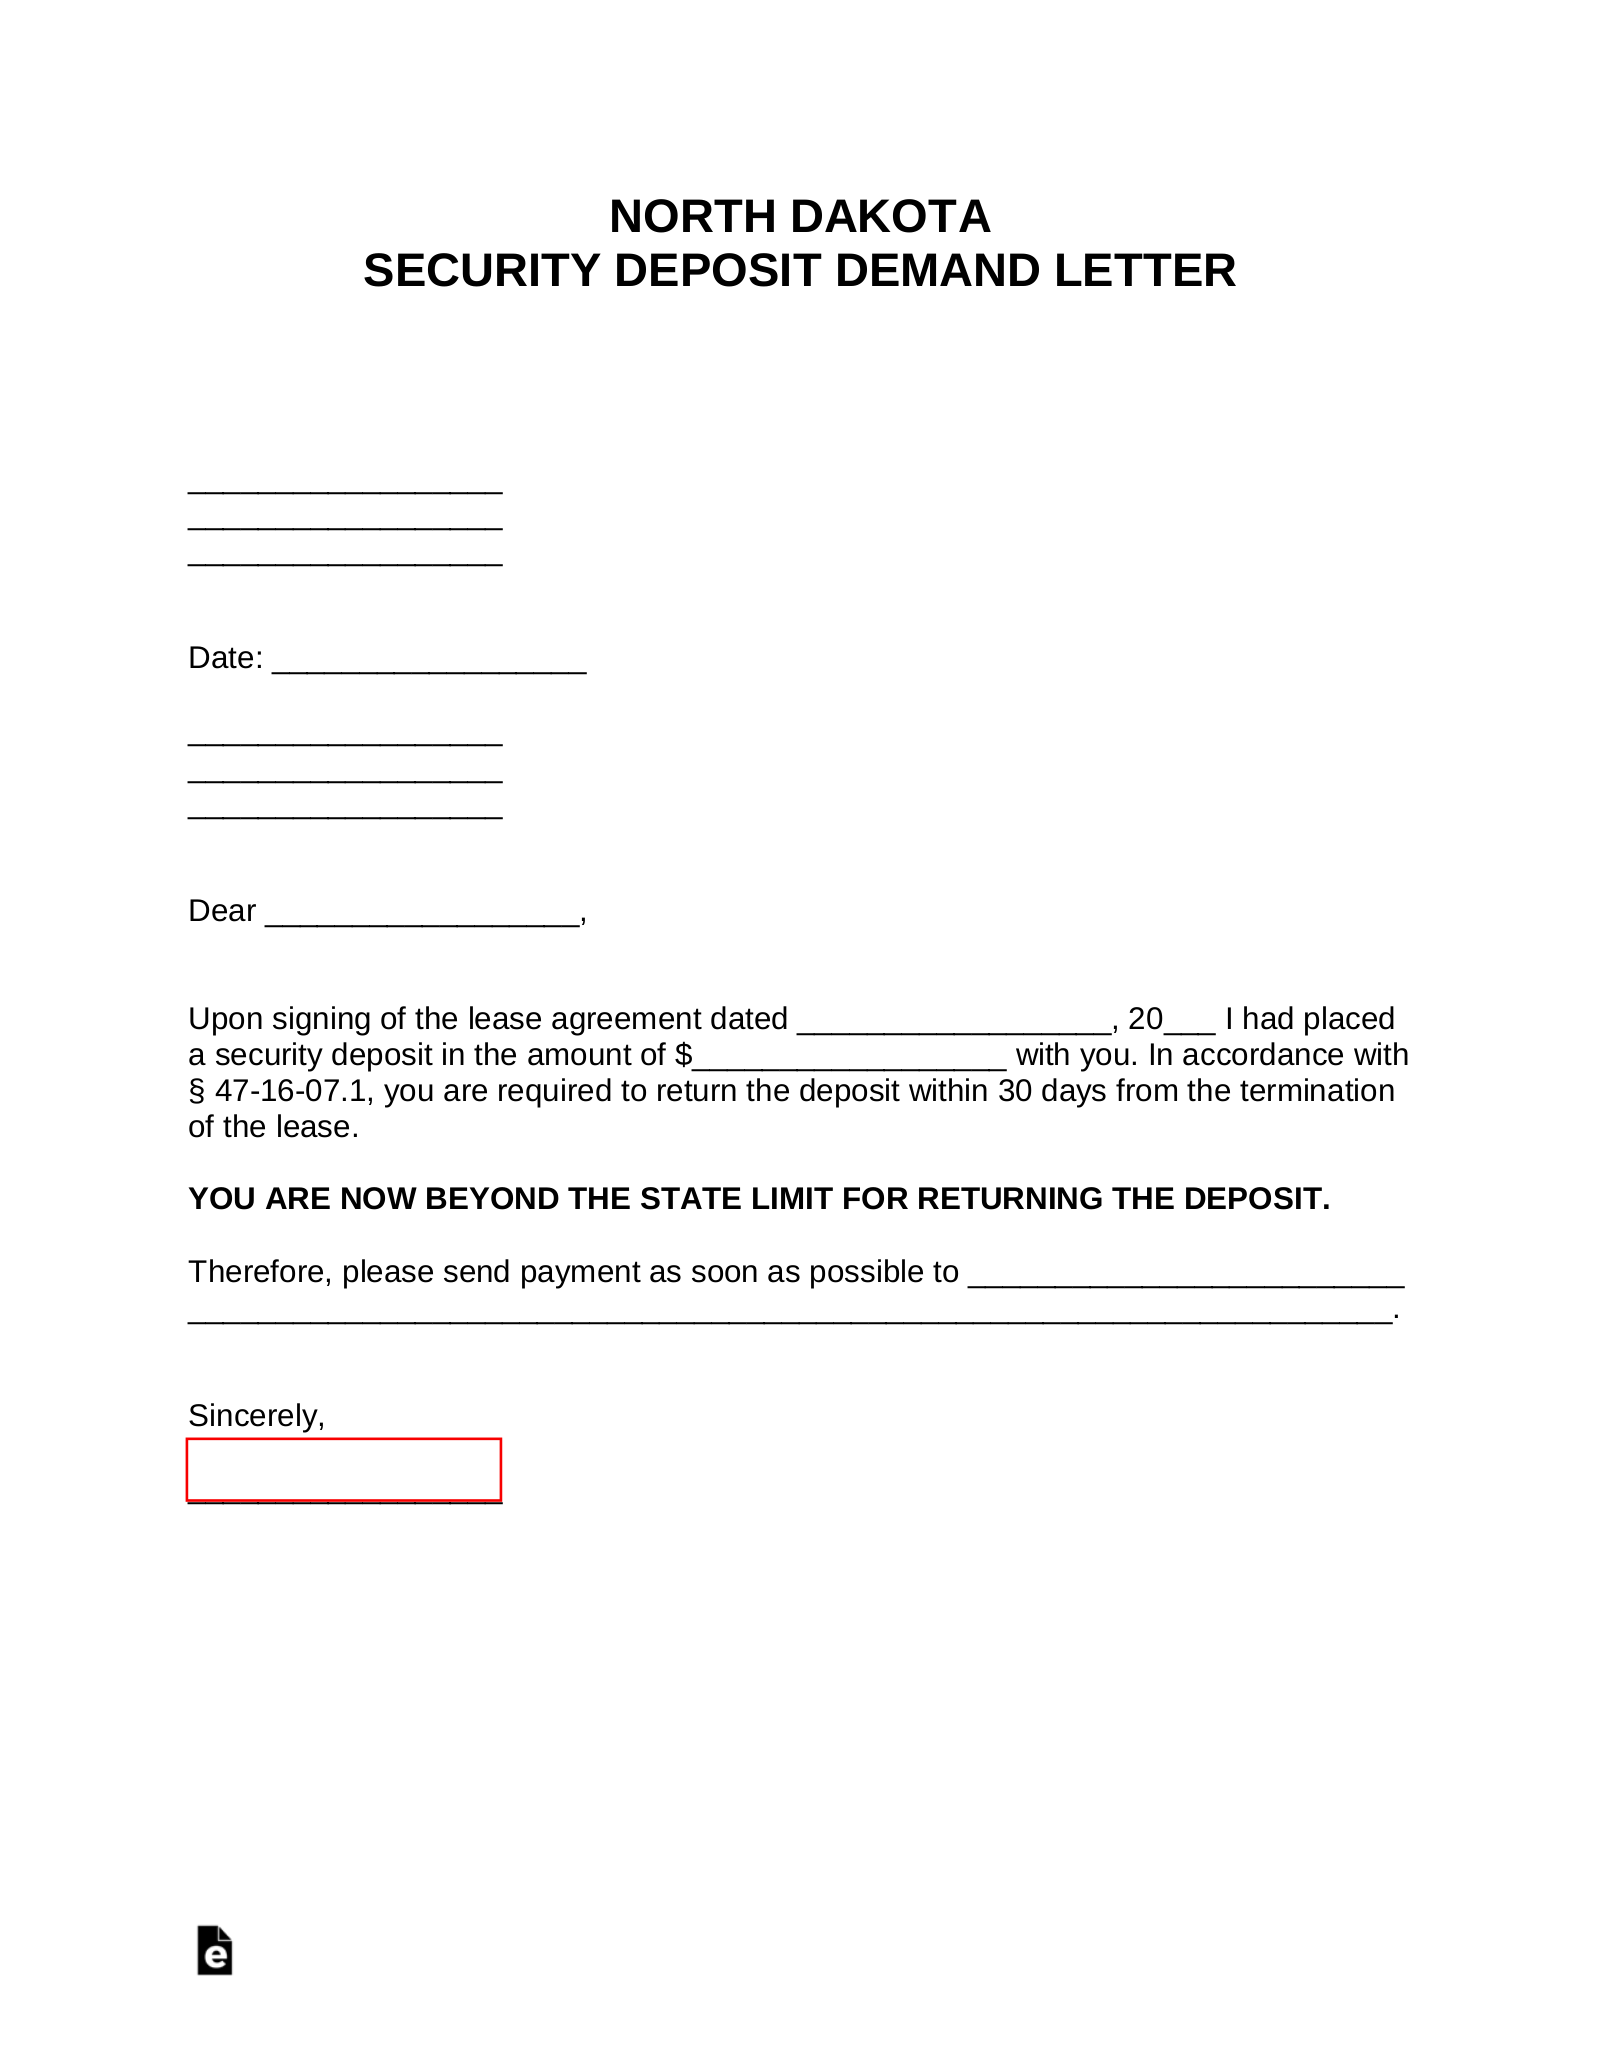 North Dakota Security Deposit Demand Letter